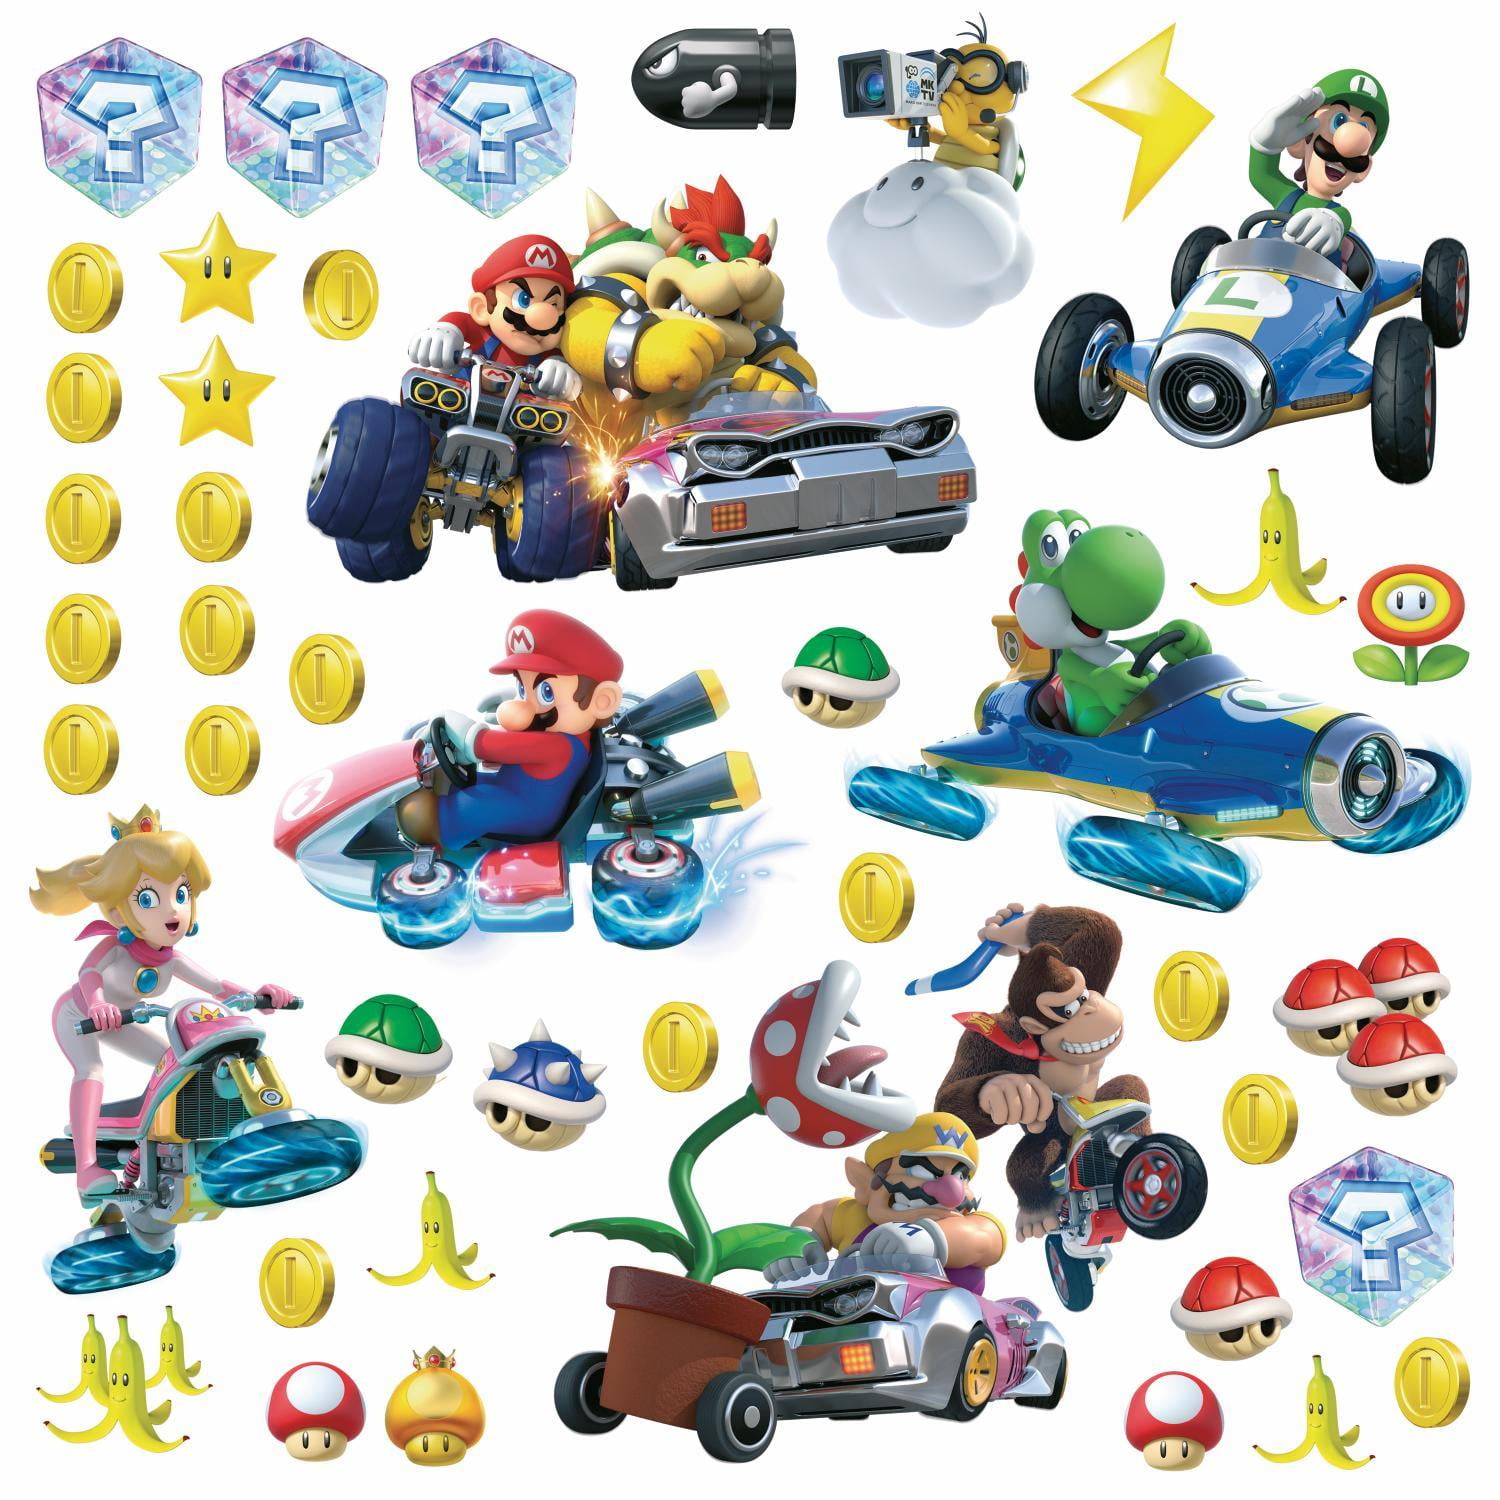 Mario Kart Vinyl Decal Wall Sticker Mario & Bowser 